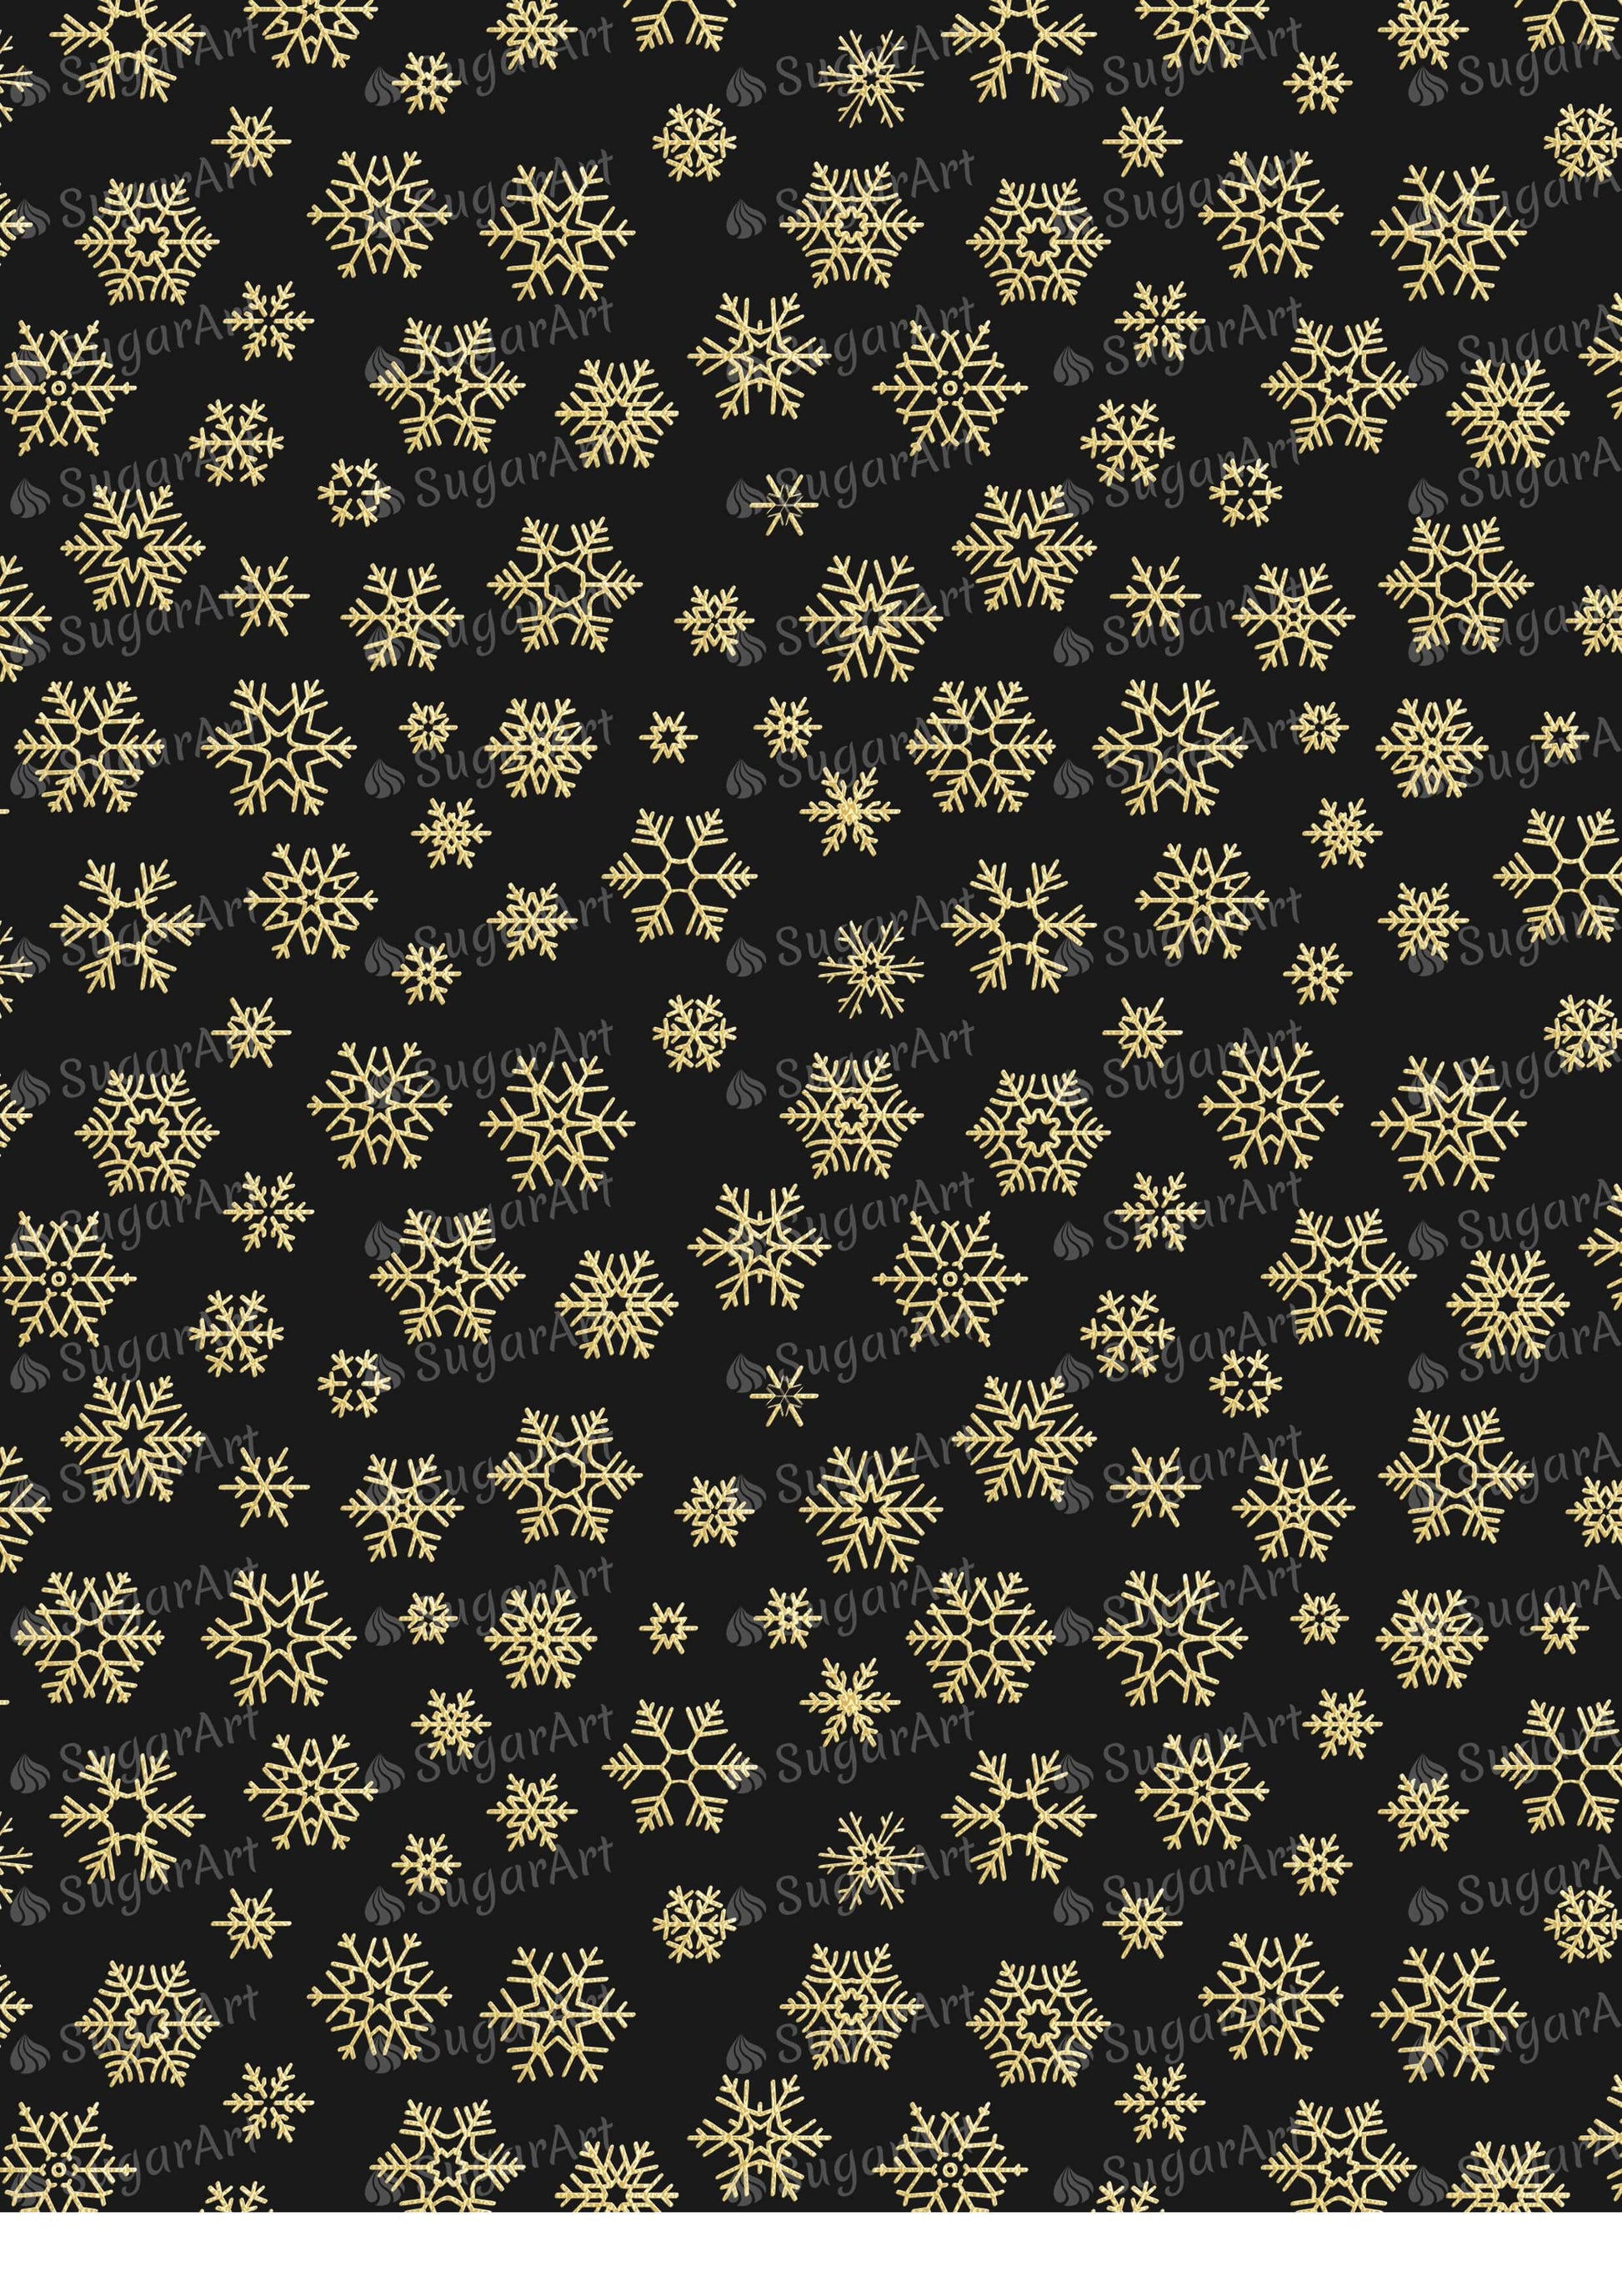 Golden Snowflakes on Black Background - BSA077.